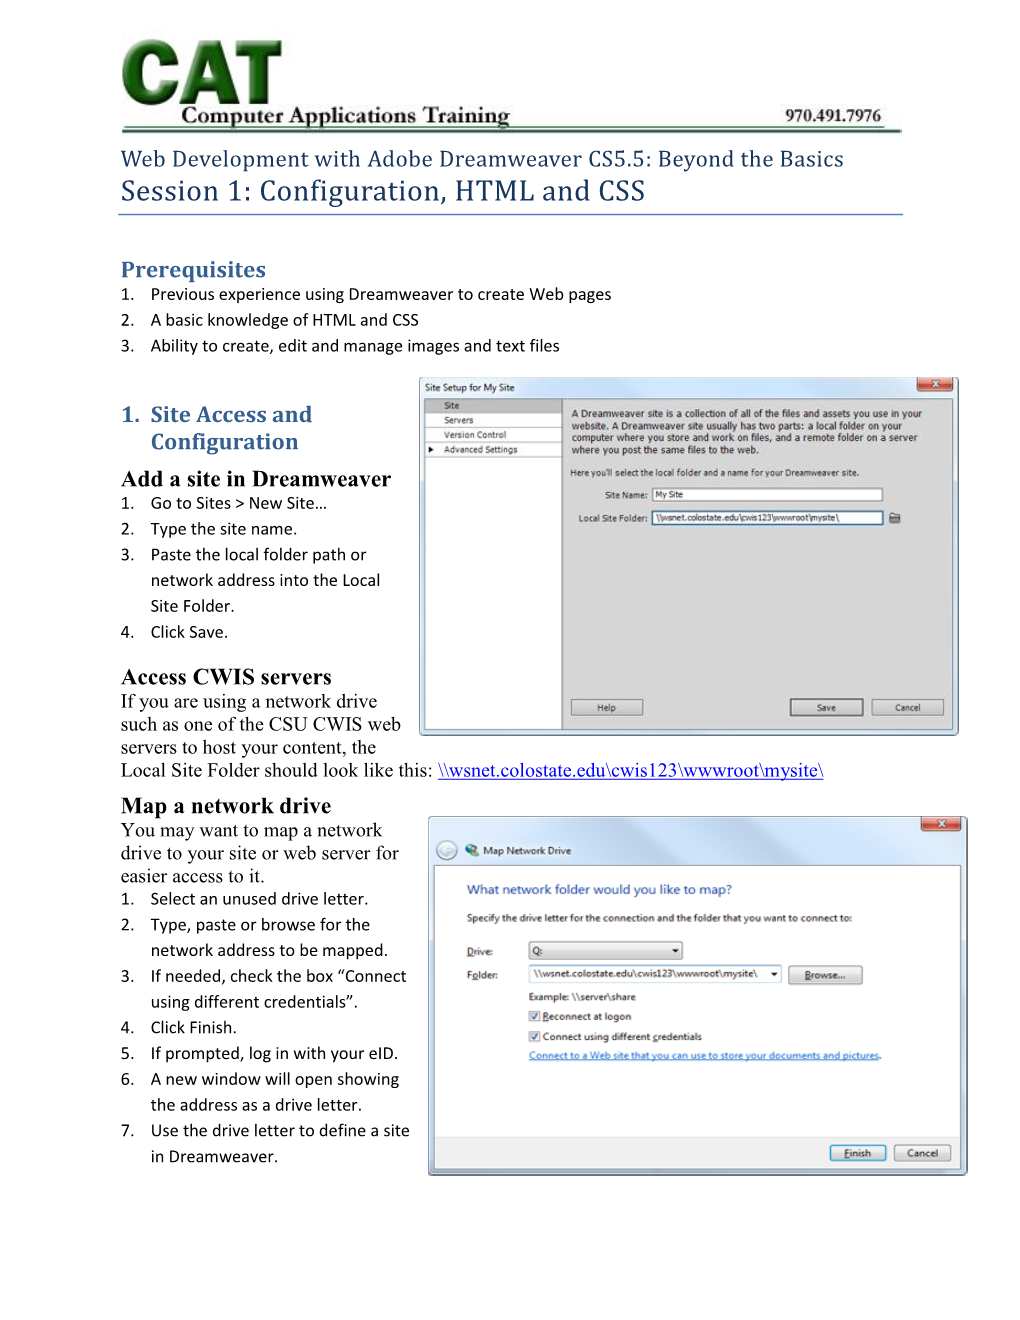 Web Development with Adobe Dreamweaver CS5.5: Beyond the Basics Session 1: Configuration, HTML and CSS